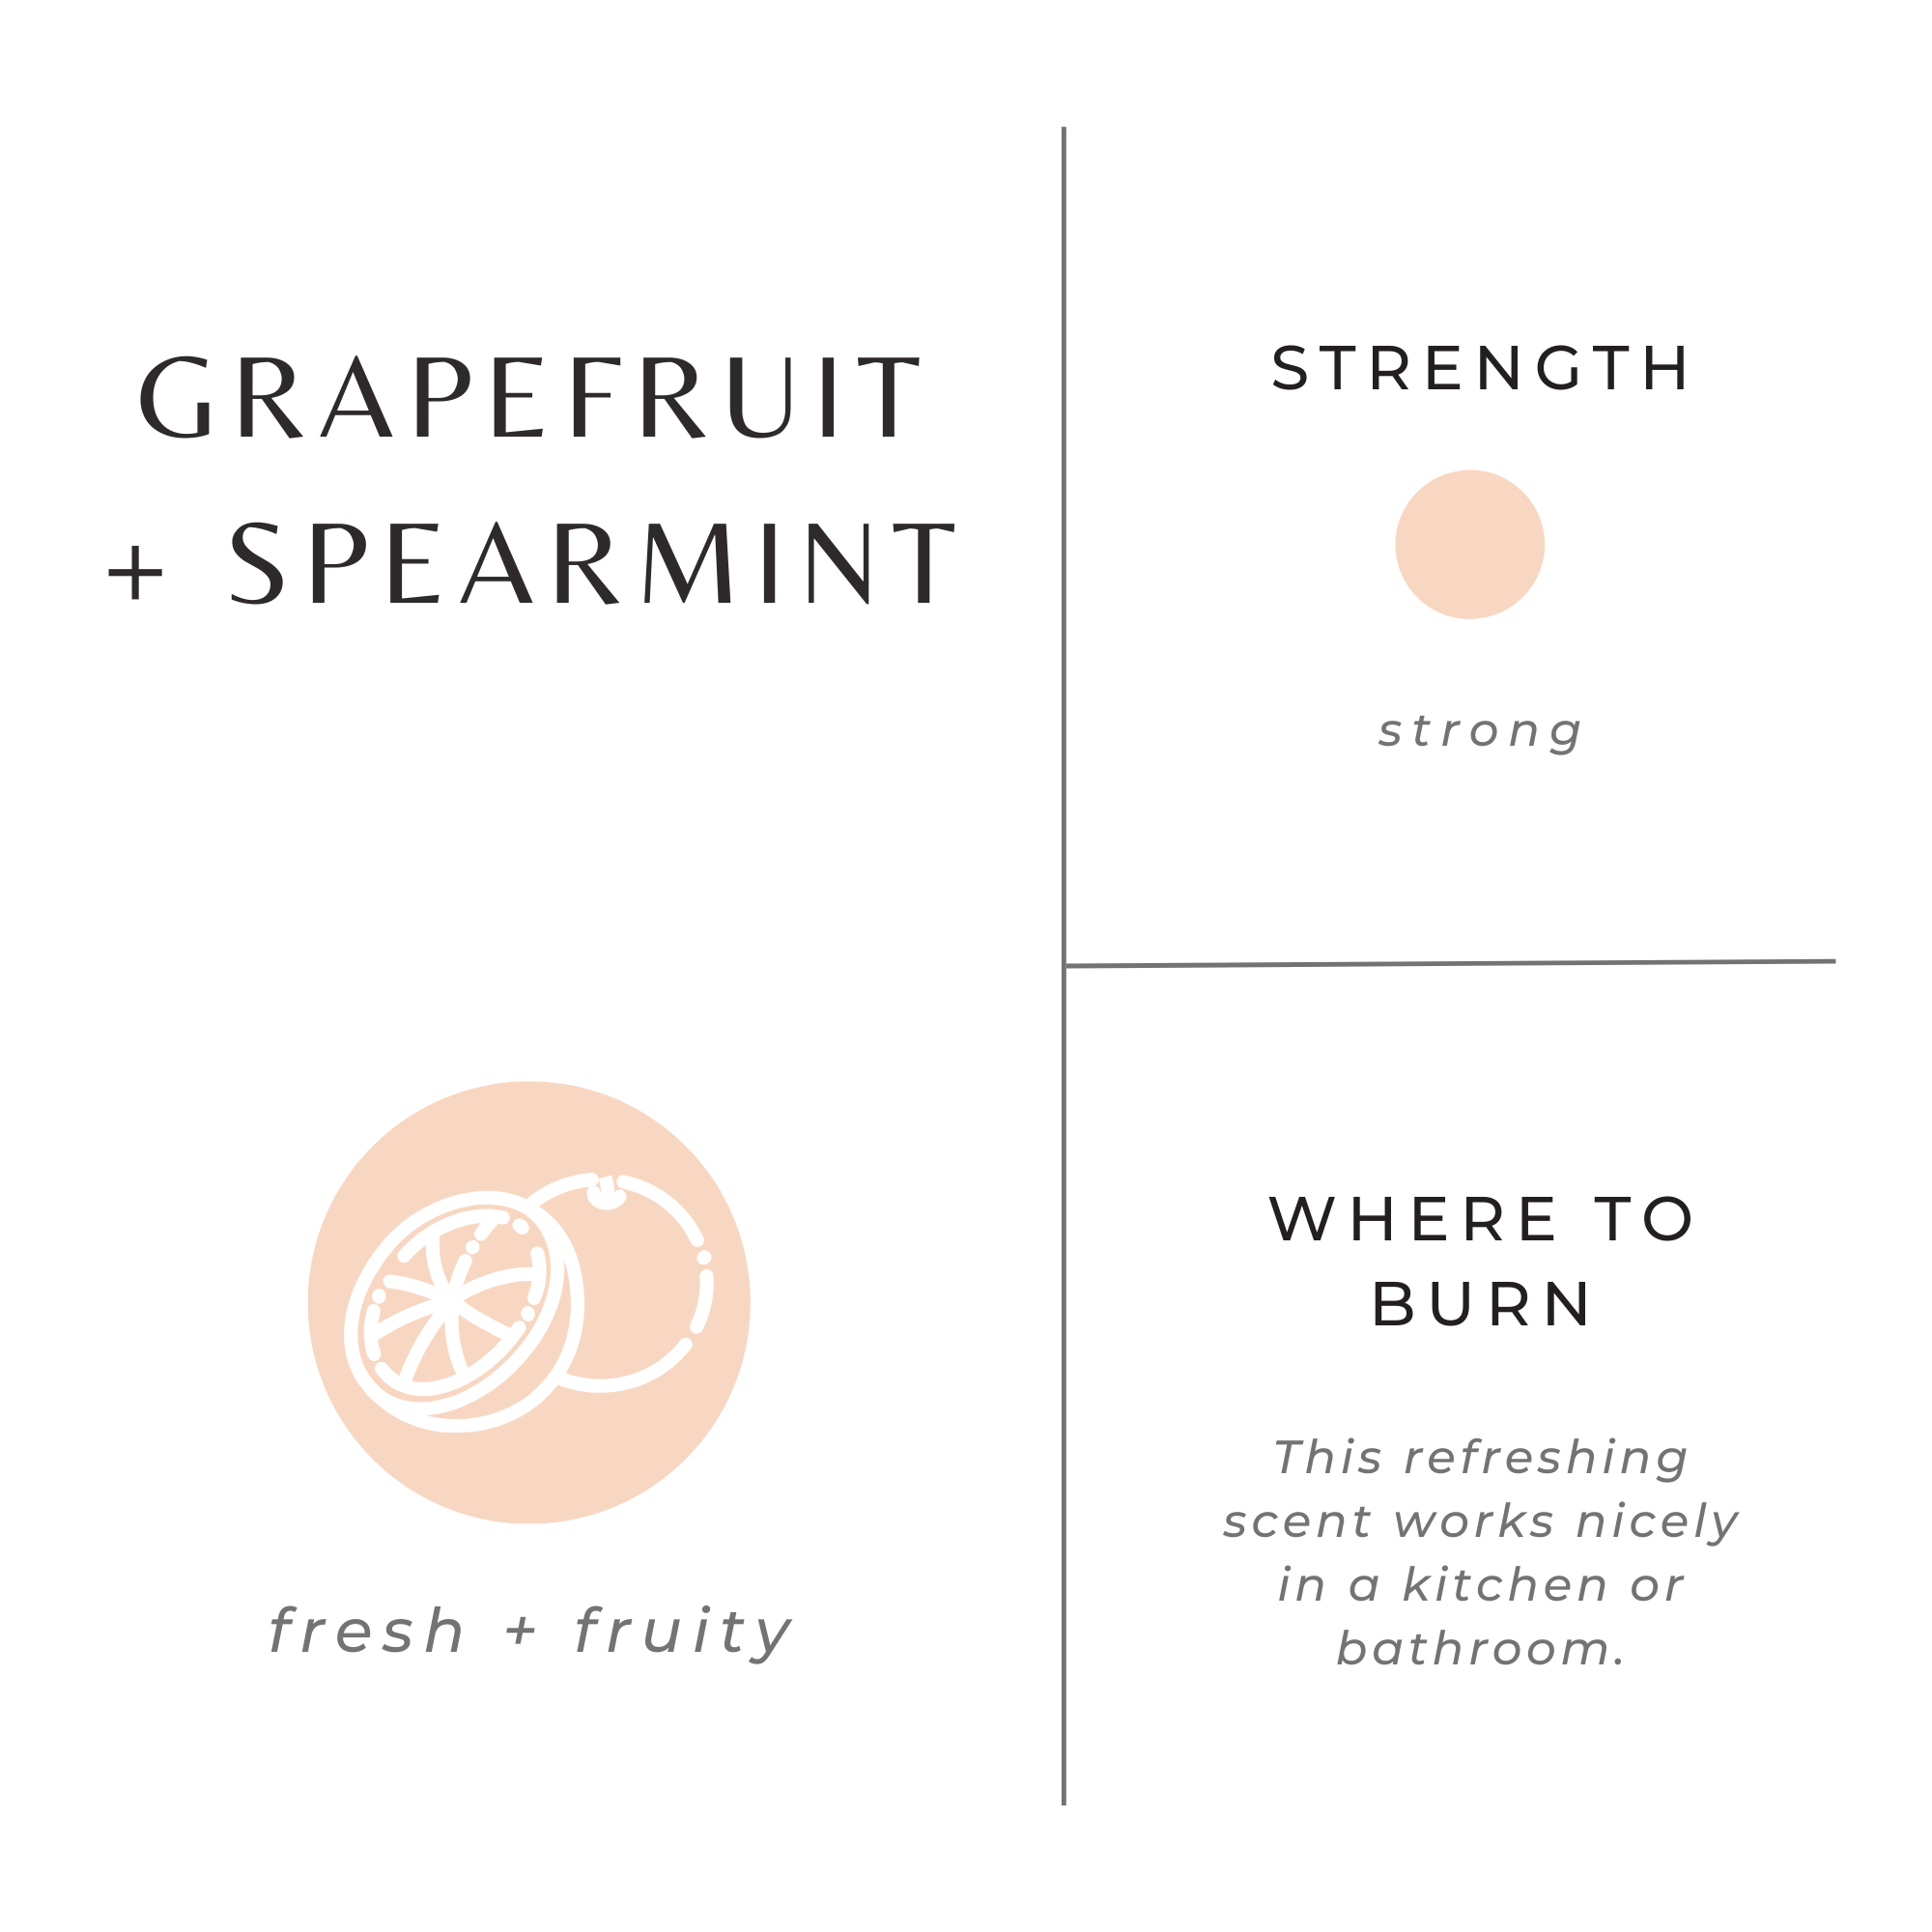 Grapefruit + Spearmint